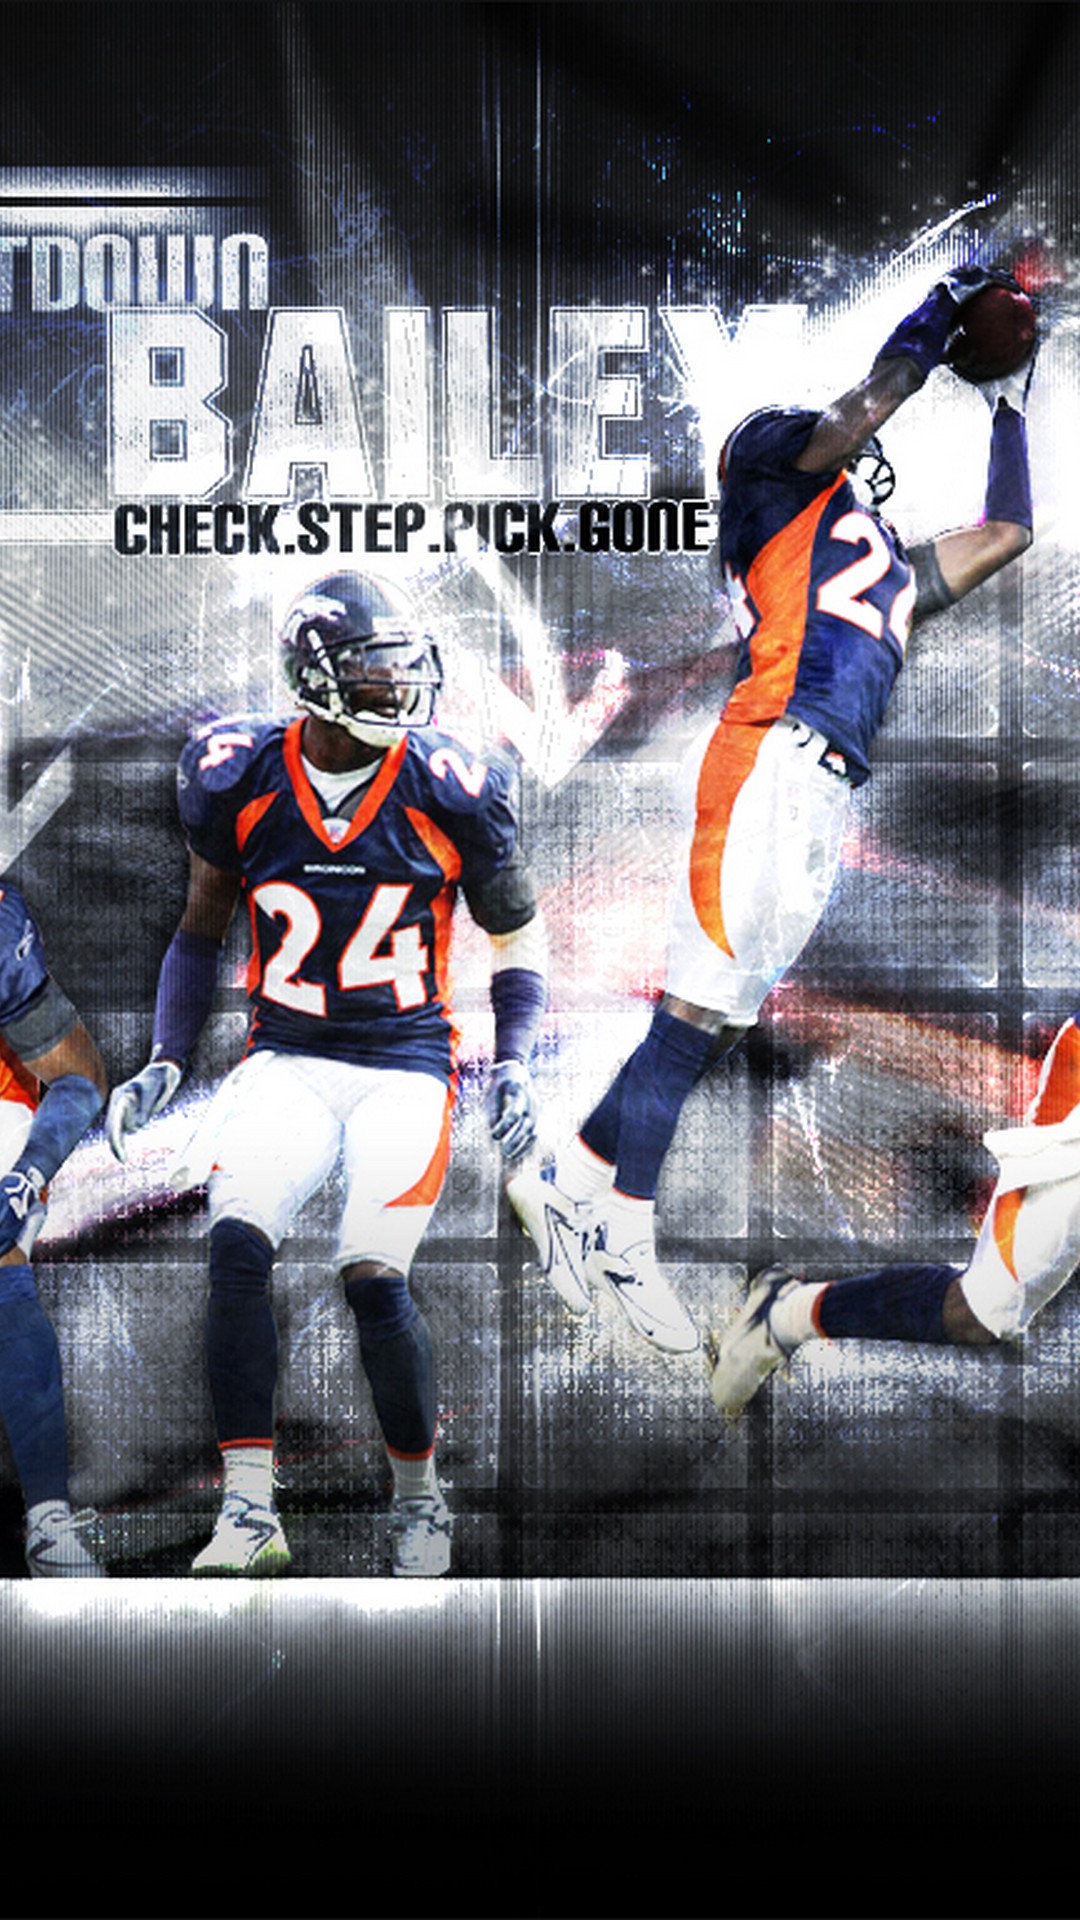 Cool NFL iPhone Wallpaper in HD - 2021 NFL Wallpaper